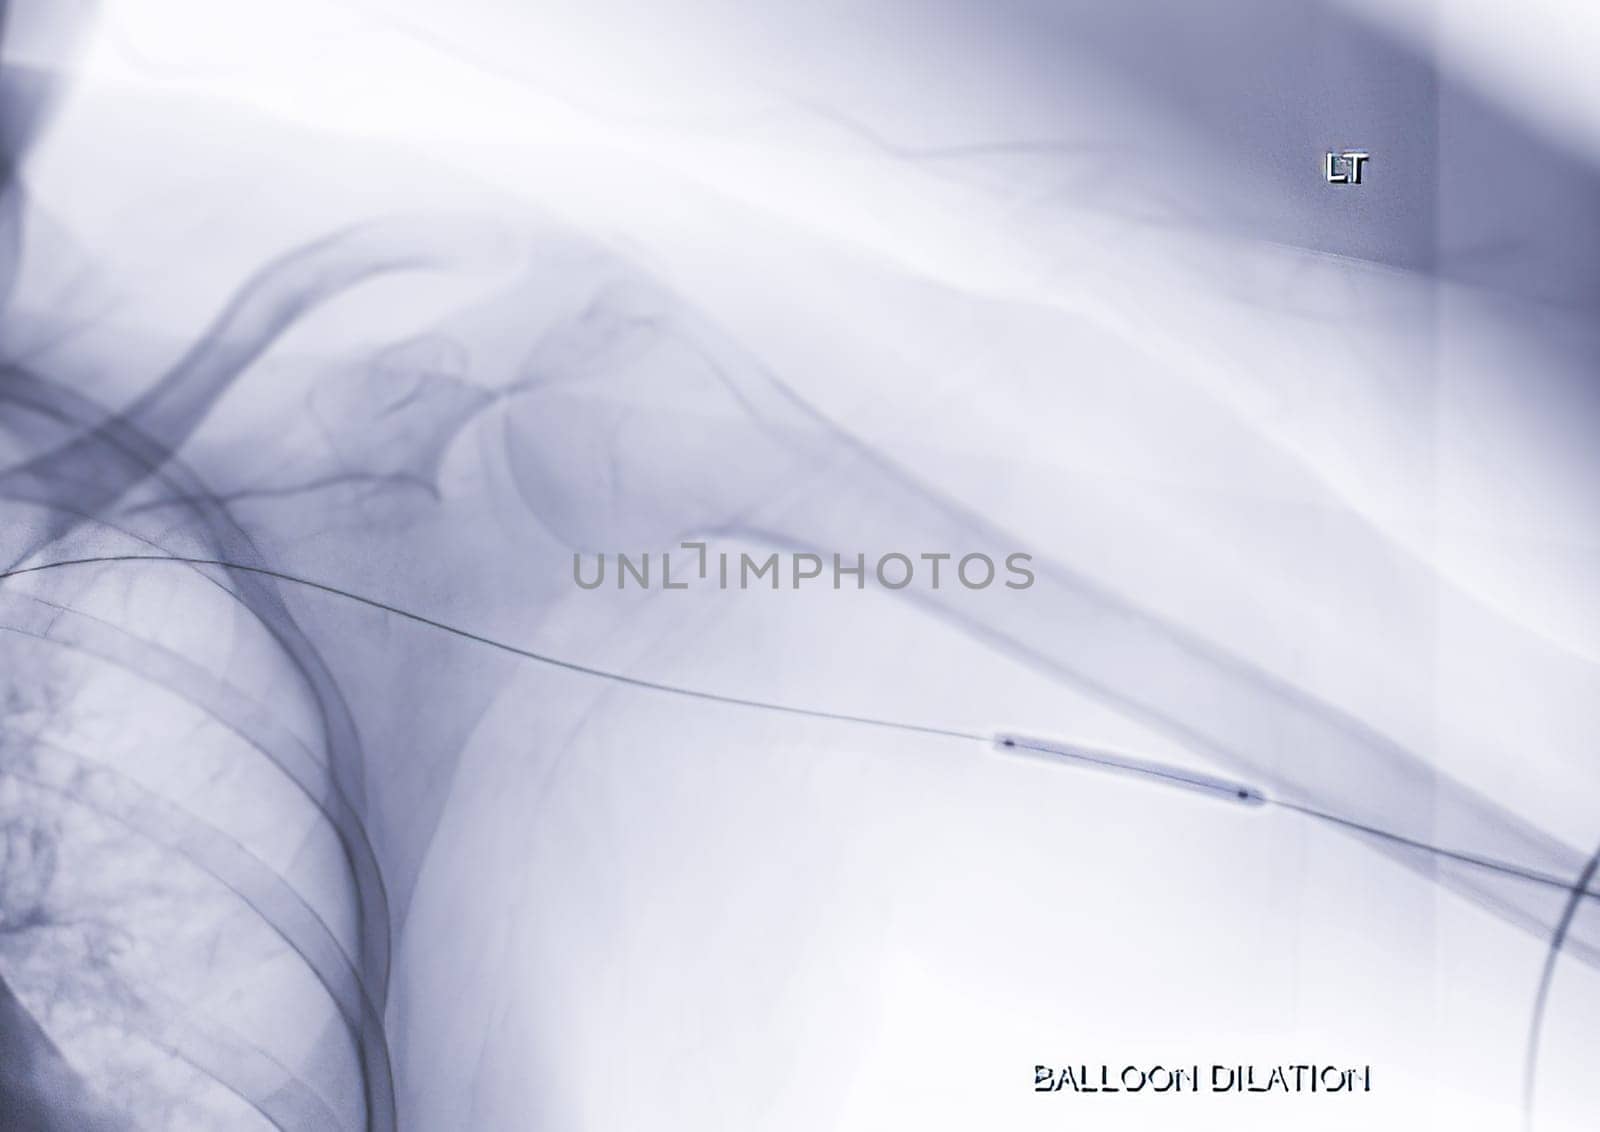 Angioplasty, balloon angioplasty and percutaneous transluminal angioplasty (PTA) on Left arm. by samunella